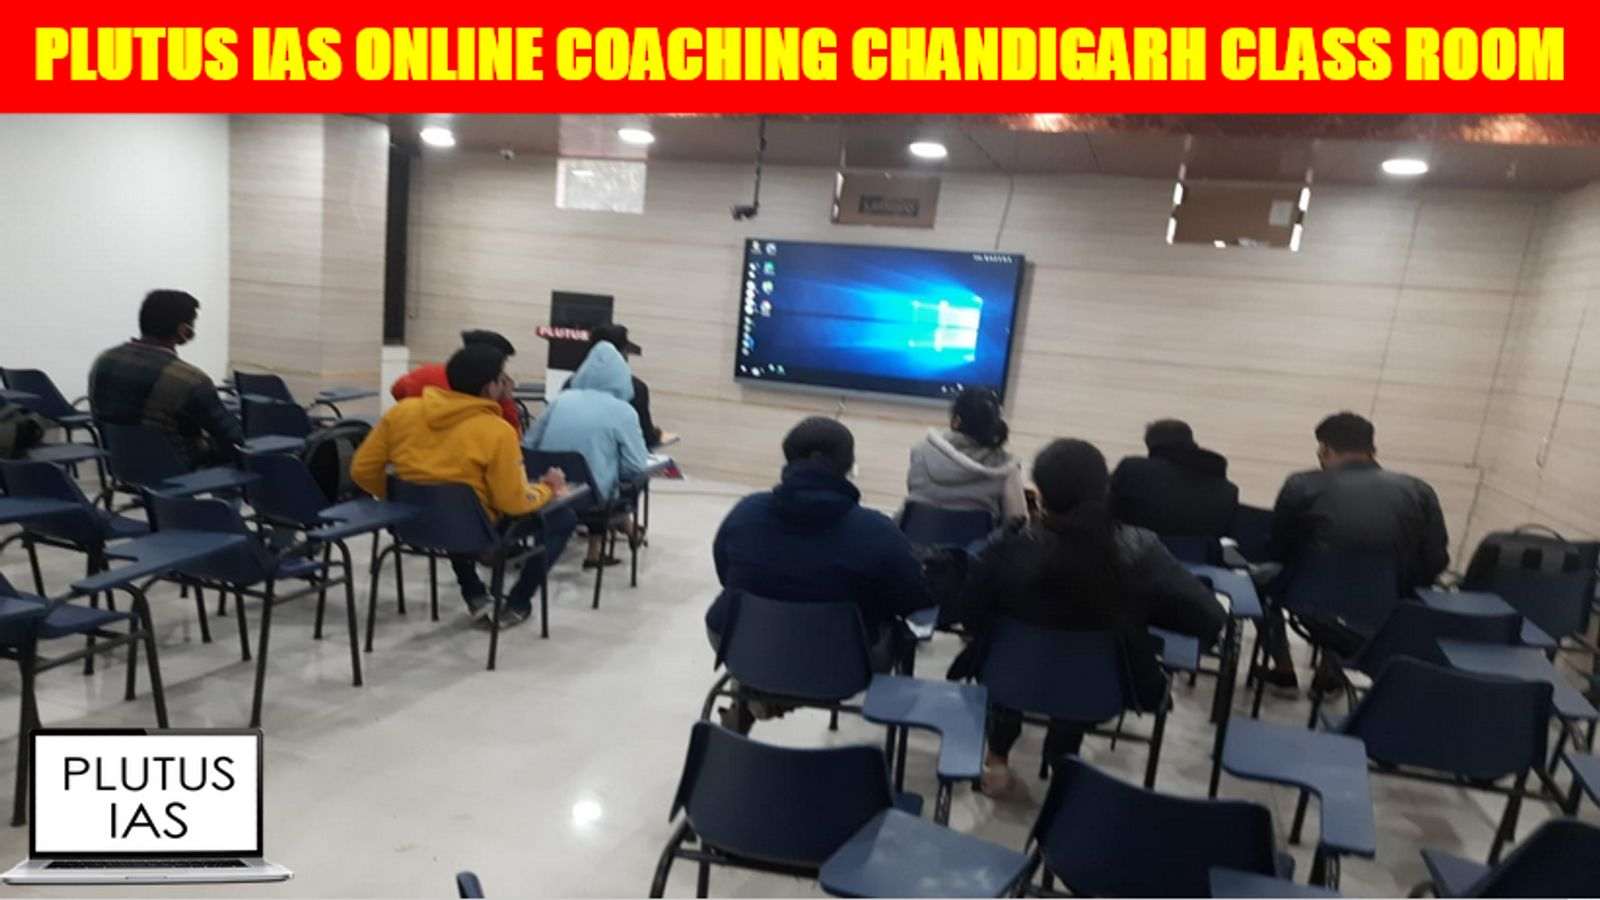 Plutus IAS Online Coaching Chandigarh Class Room